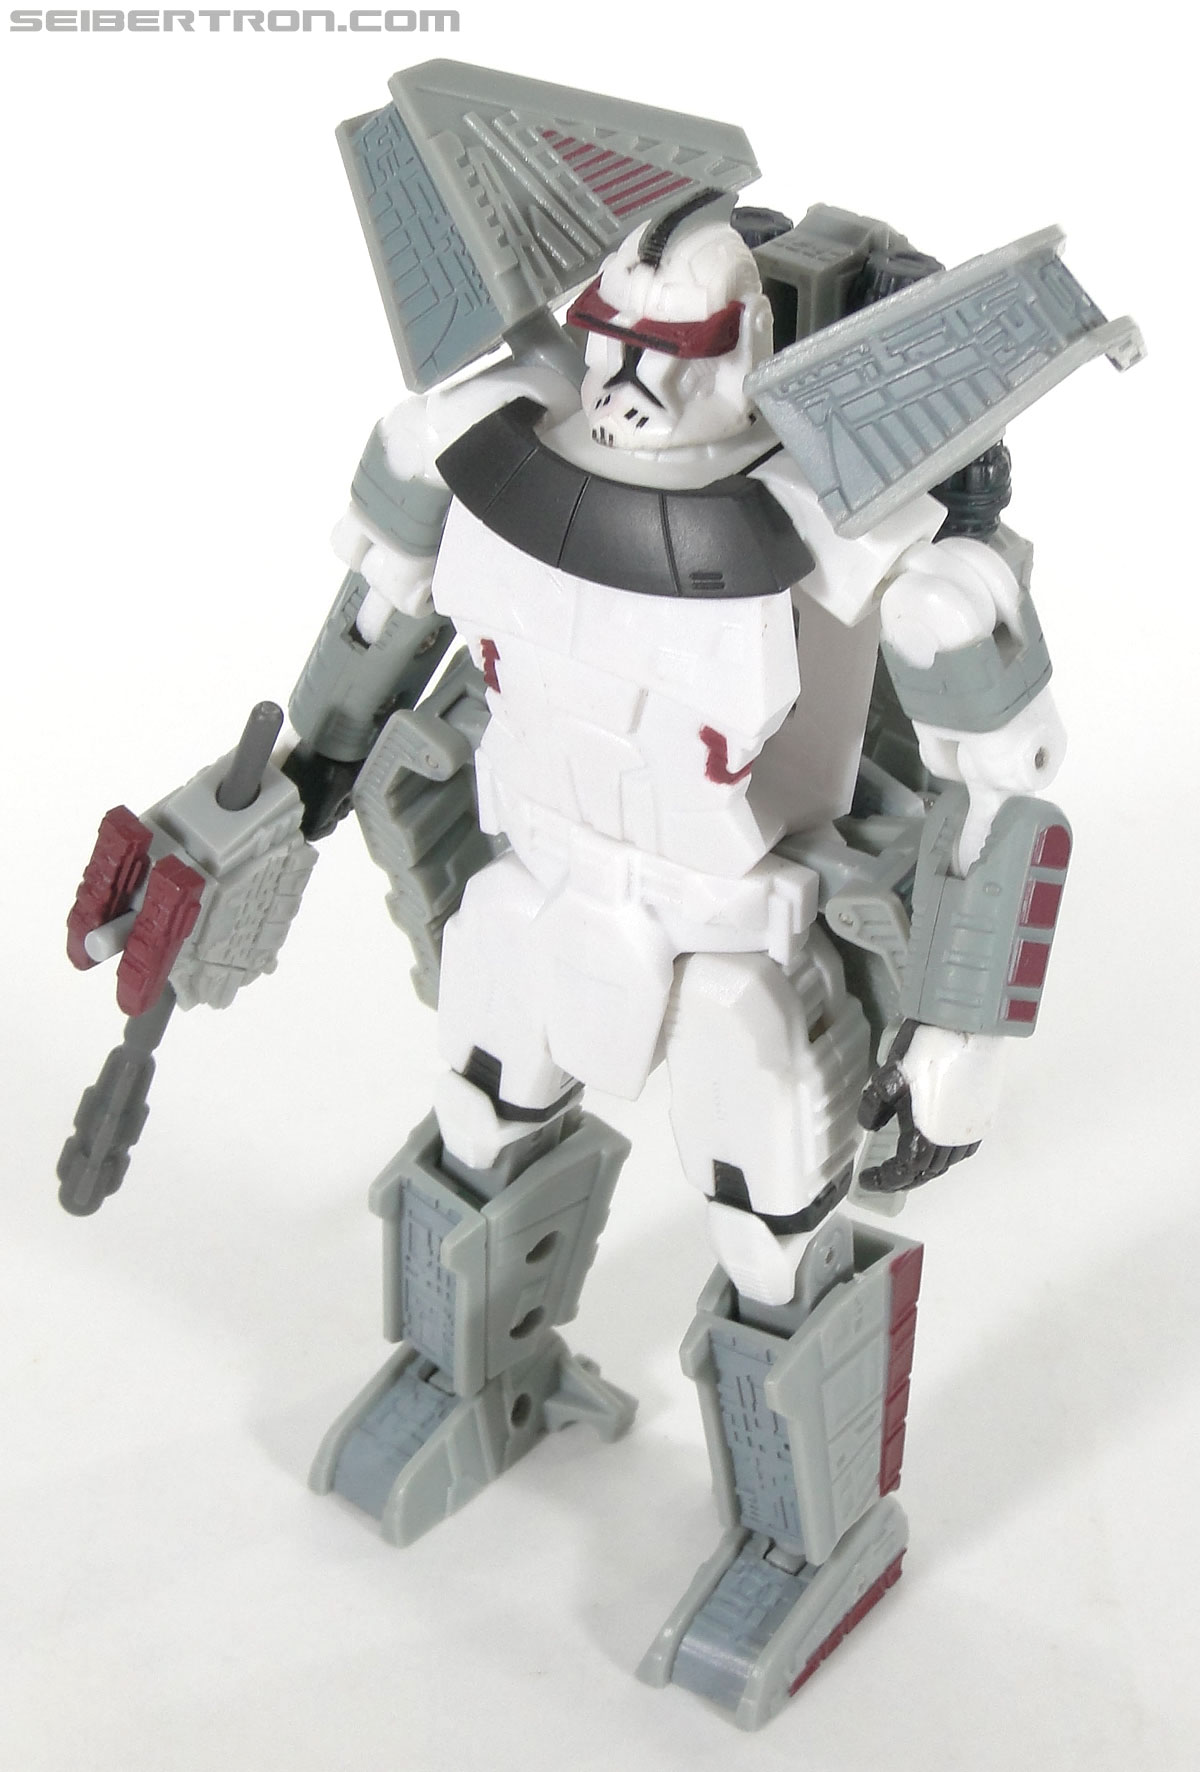 Star Wars Transformers Lieutenant Thire (Republic Attack Cruiser) (Image #56 of 76)